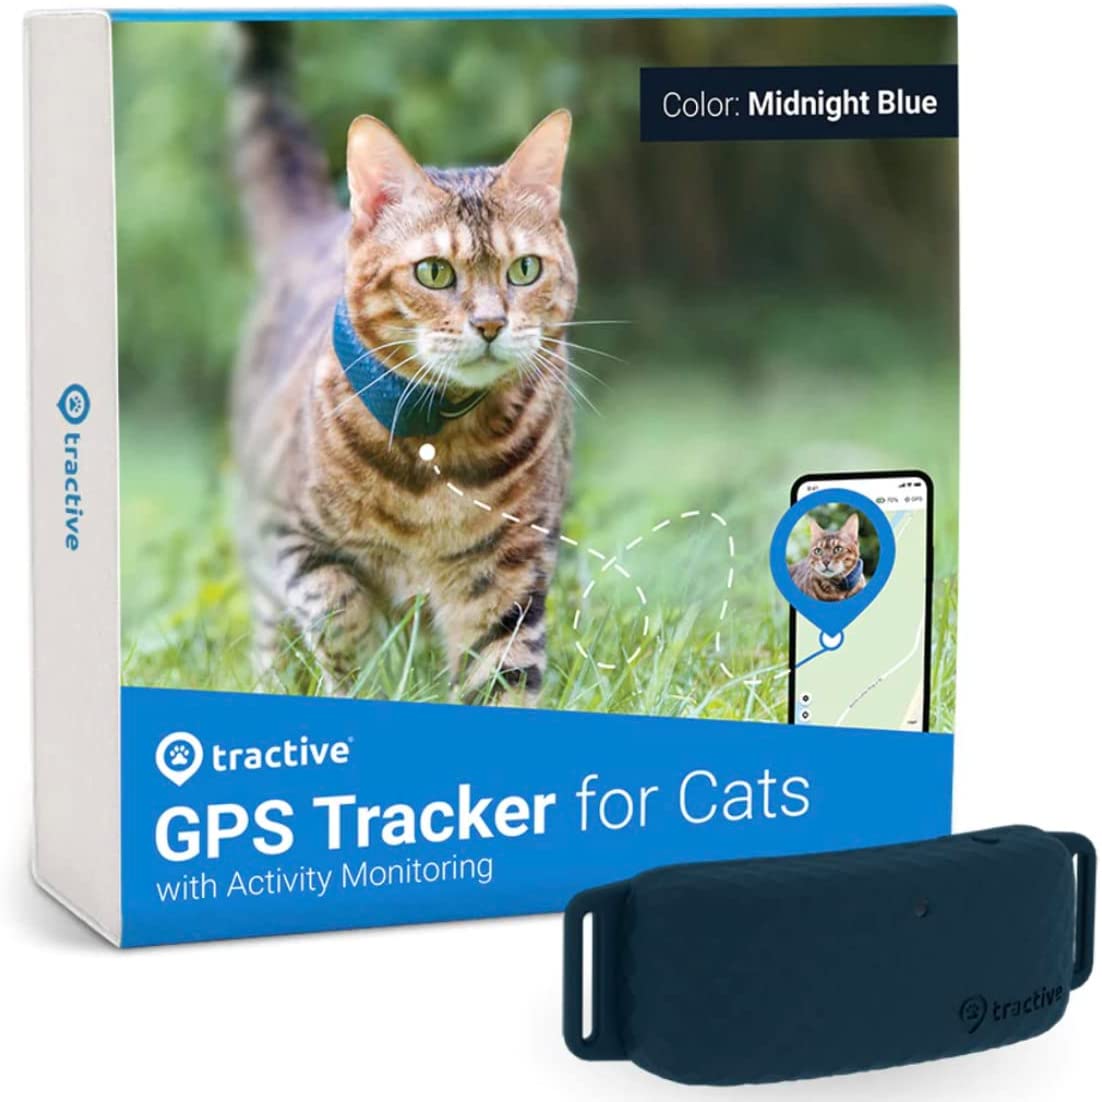 1. Tractive GPS Cat Tracker